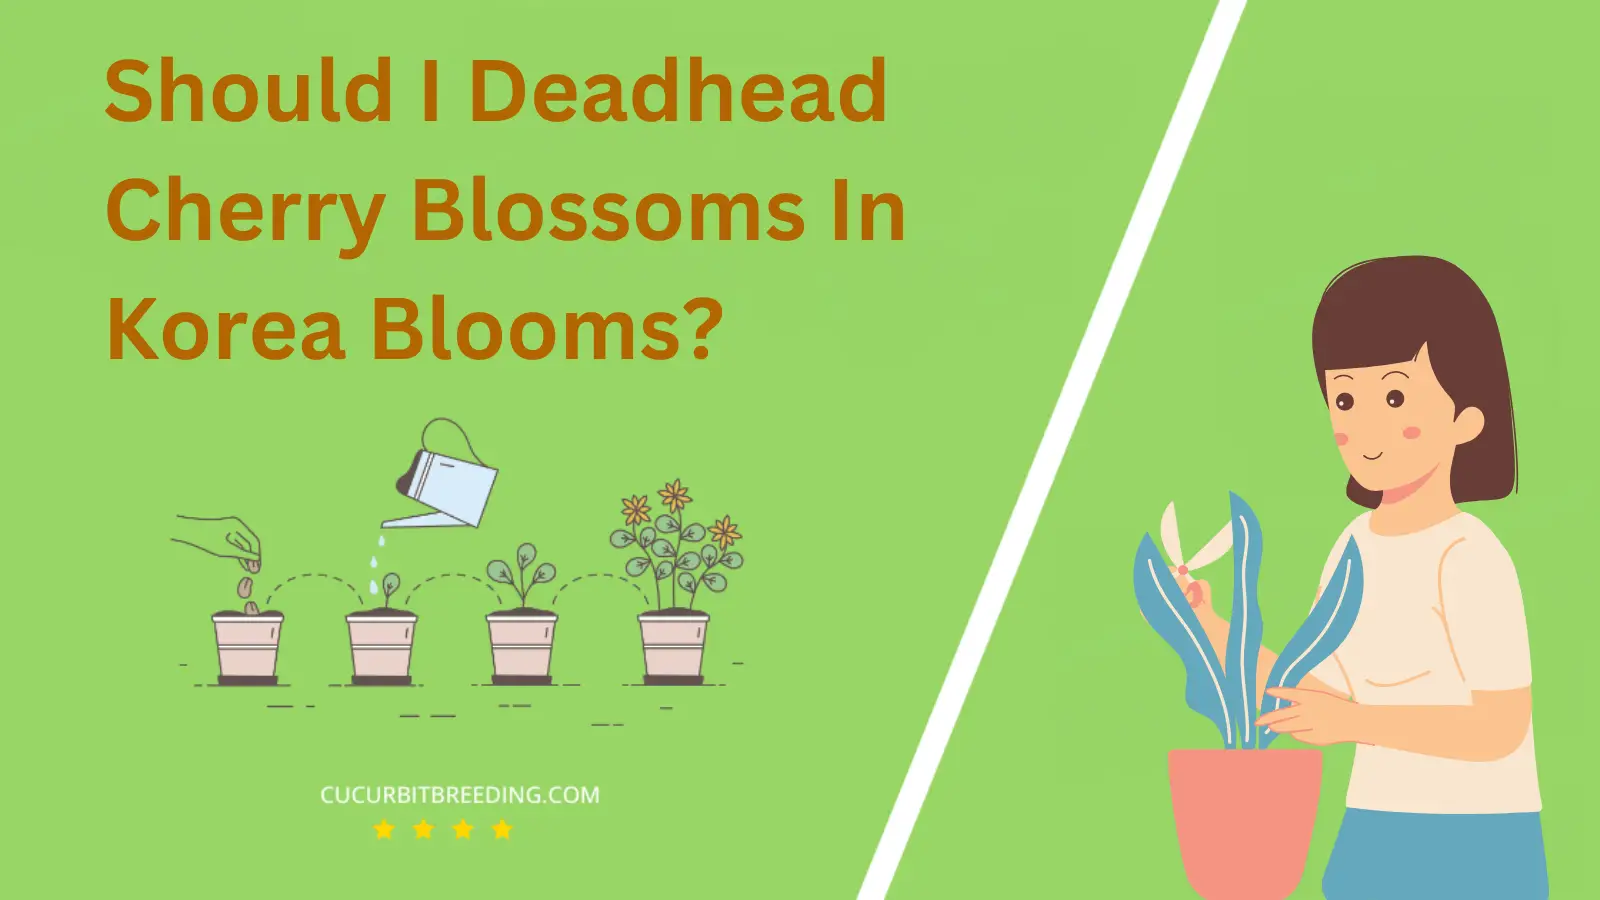 Should I Deadhead Cherry Blossoms In Korea Blooms?